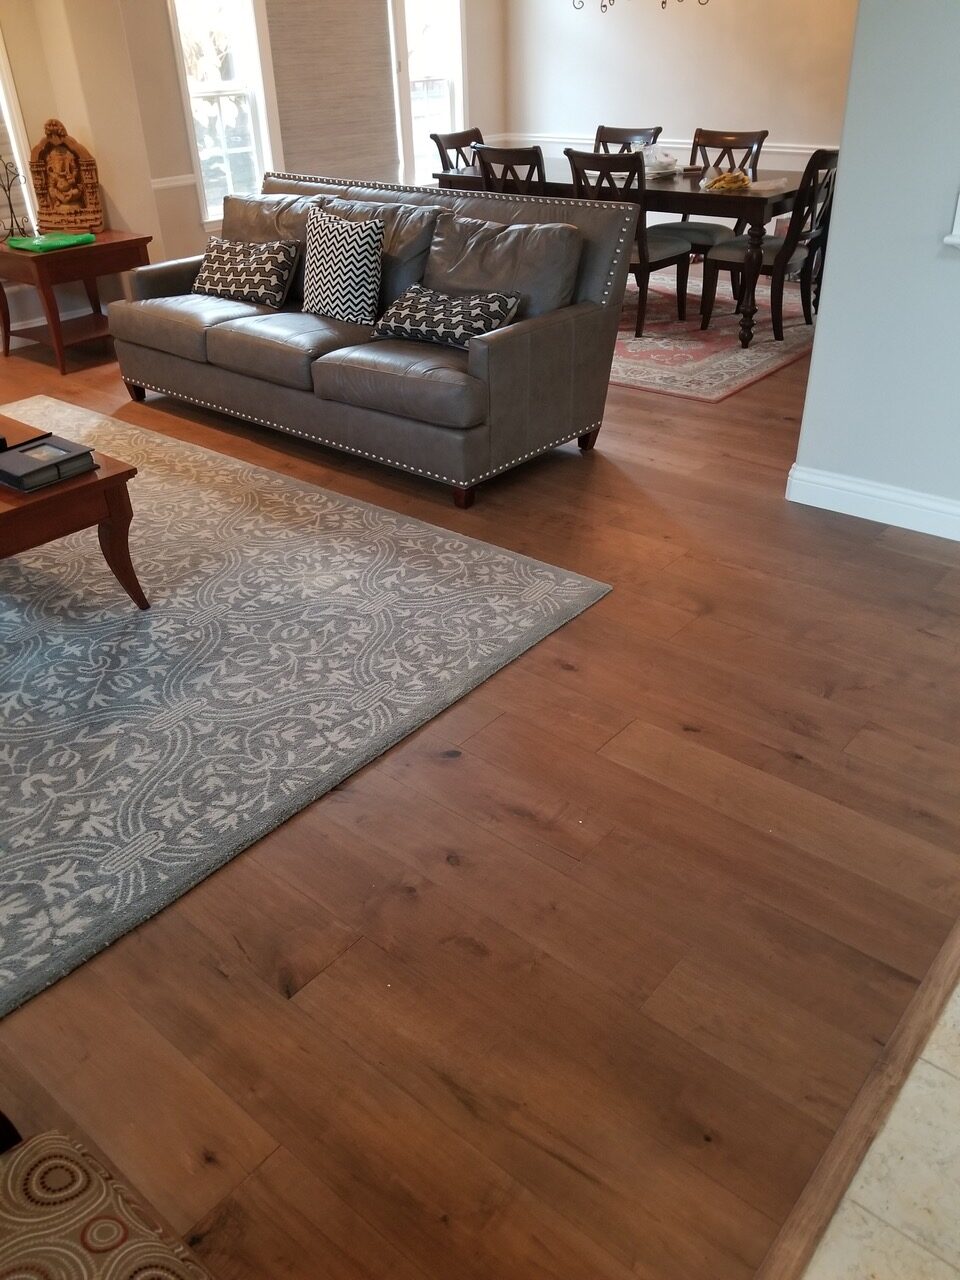 A refinished hardwood floor. 